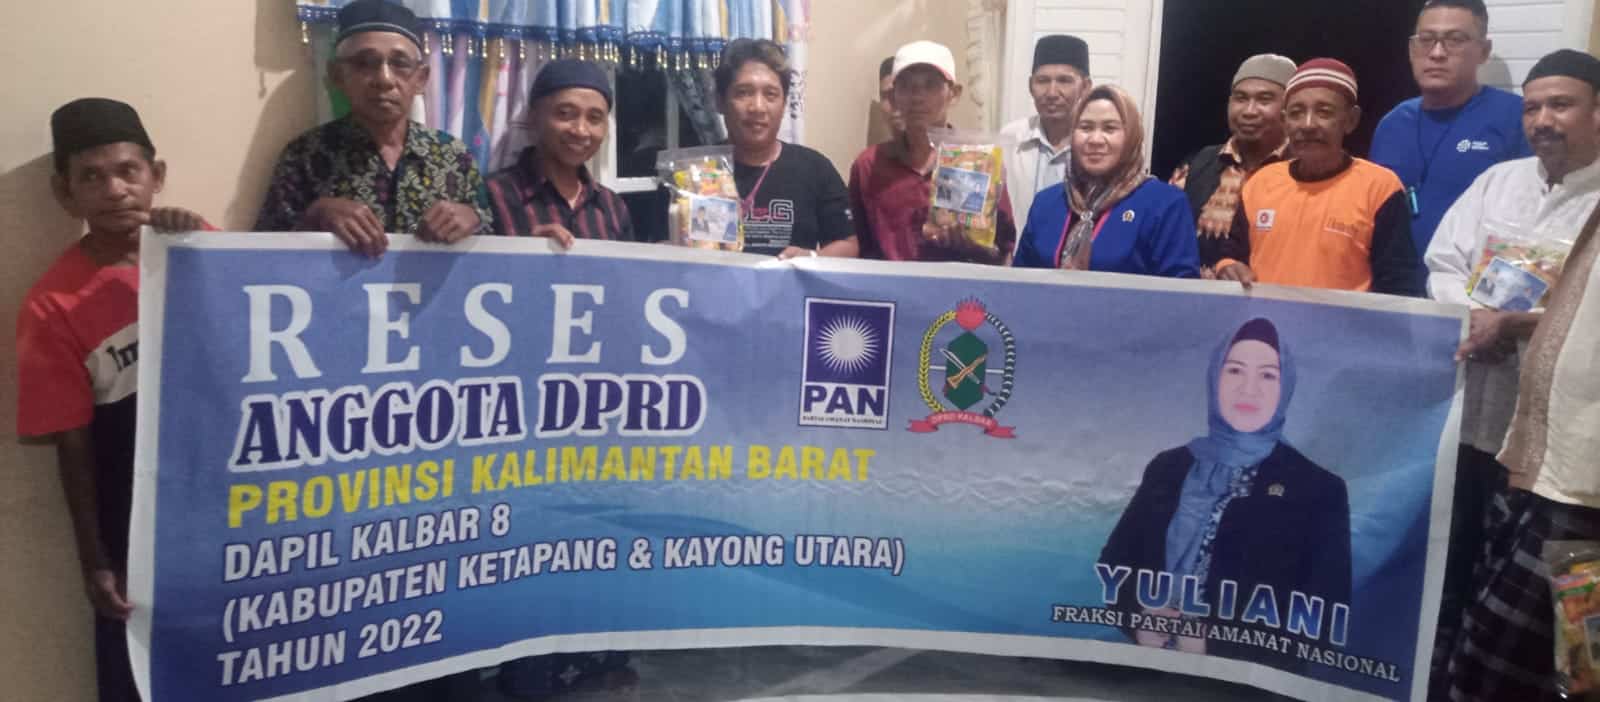 Reses Anggota DPRD Provinsi Kalimantan Barat, Yuliani Aloh di Dusun Stabun, Desa Baru, Kecamatan Benua Kayong, Selasa 11 Oktober 2022 malam. (Foto: Adi LC)